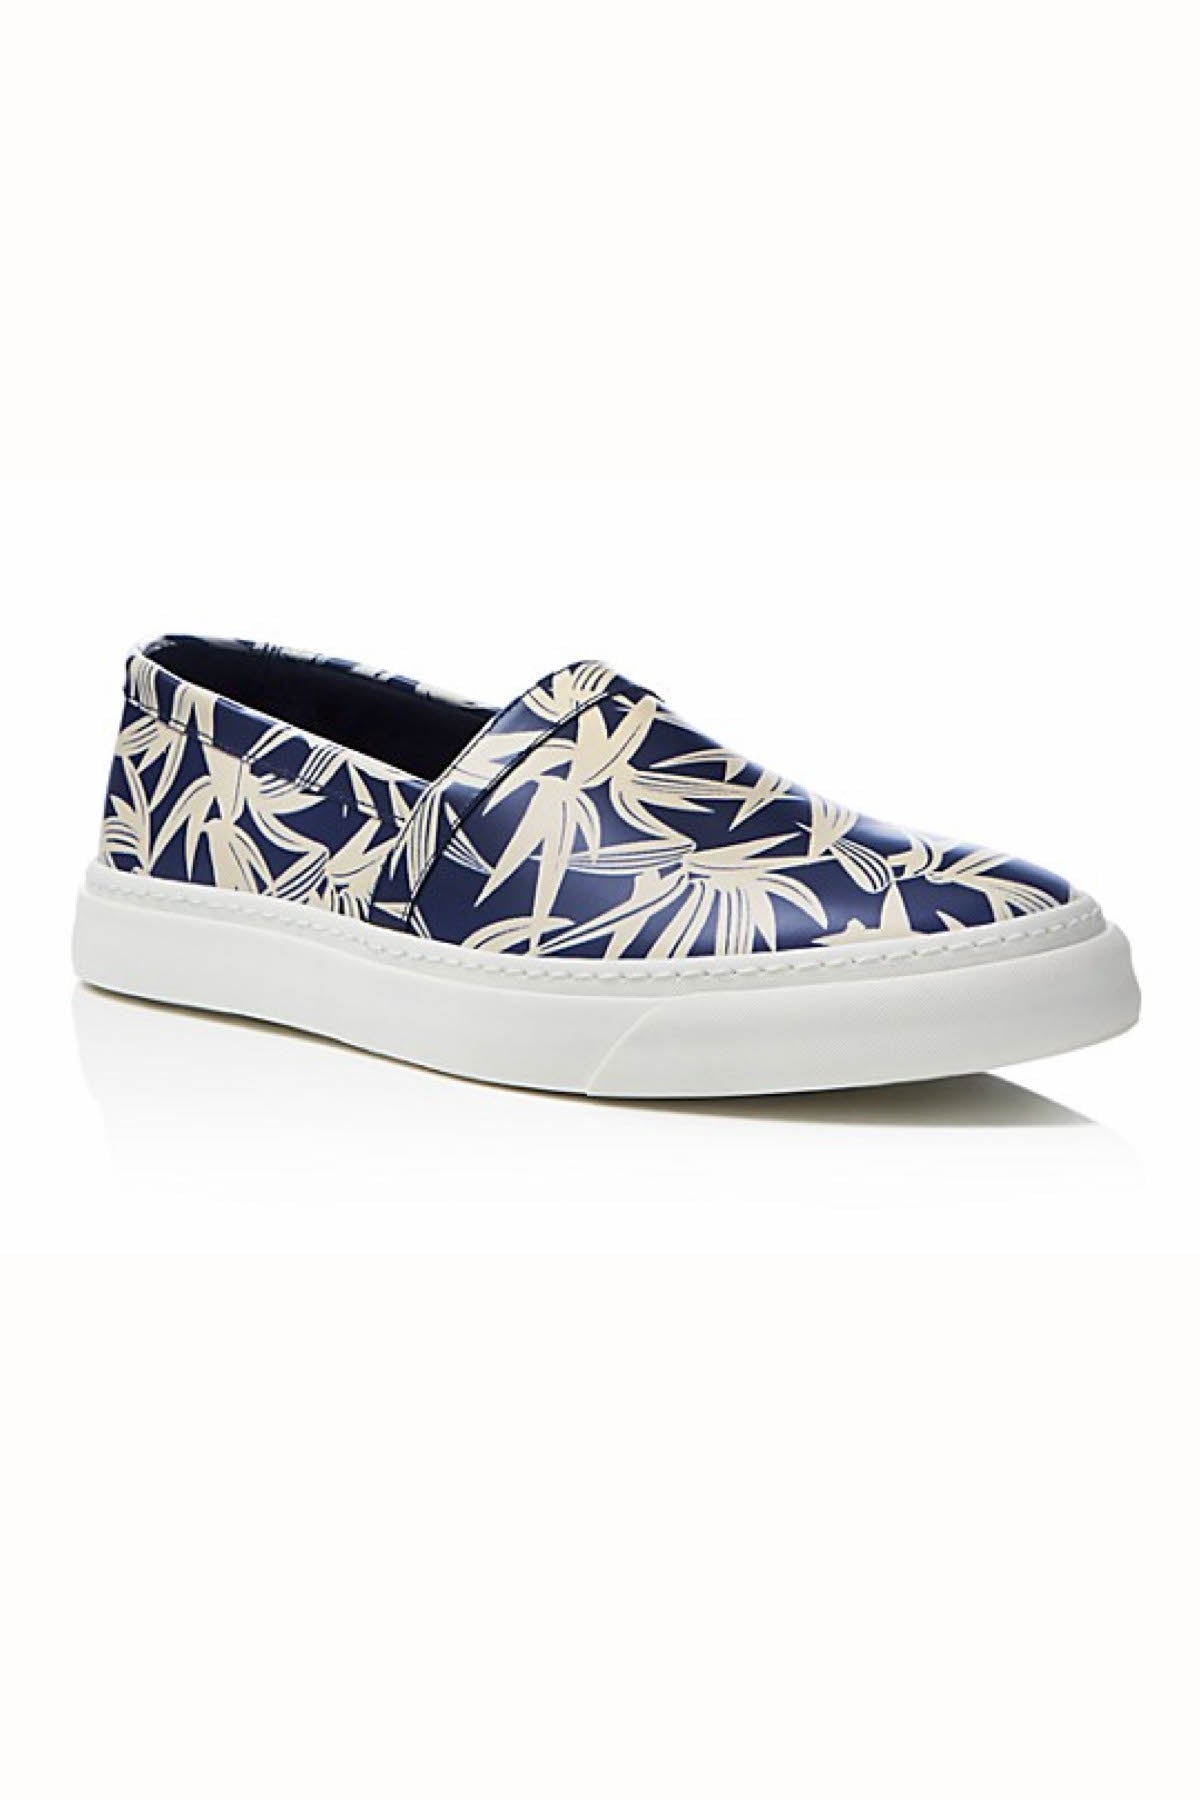 Marc Jacobs Blue/White Leaf-Print Slip-On Sneakers